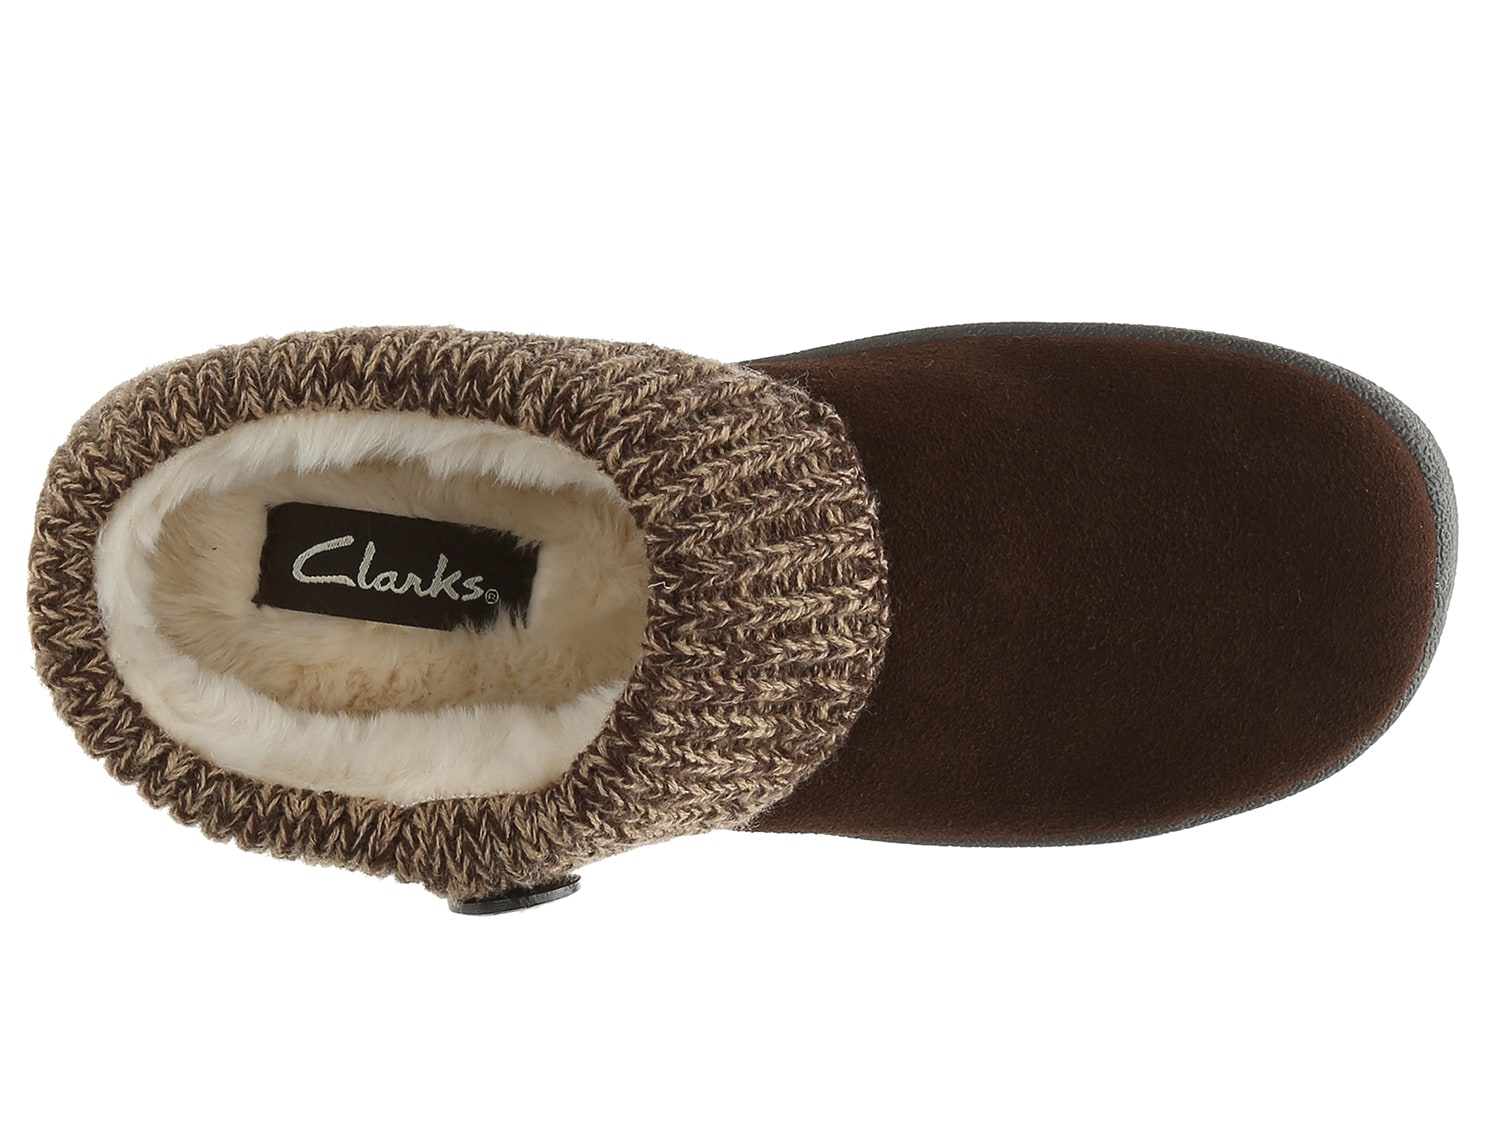 clarks slipper boots